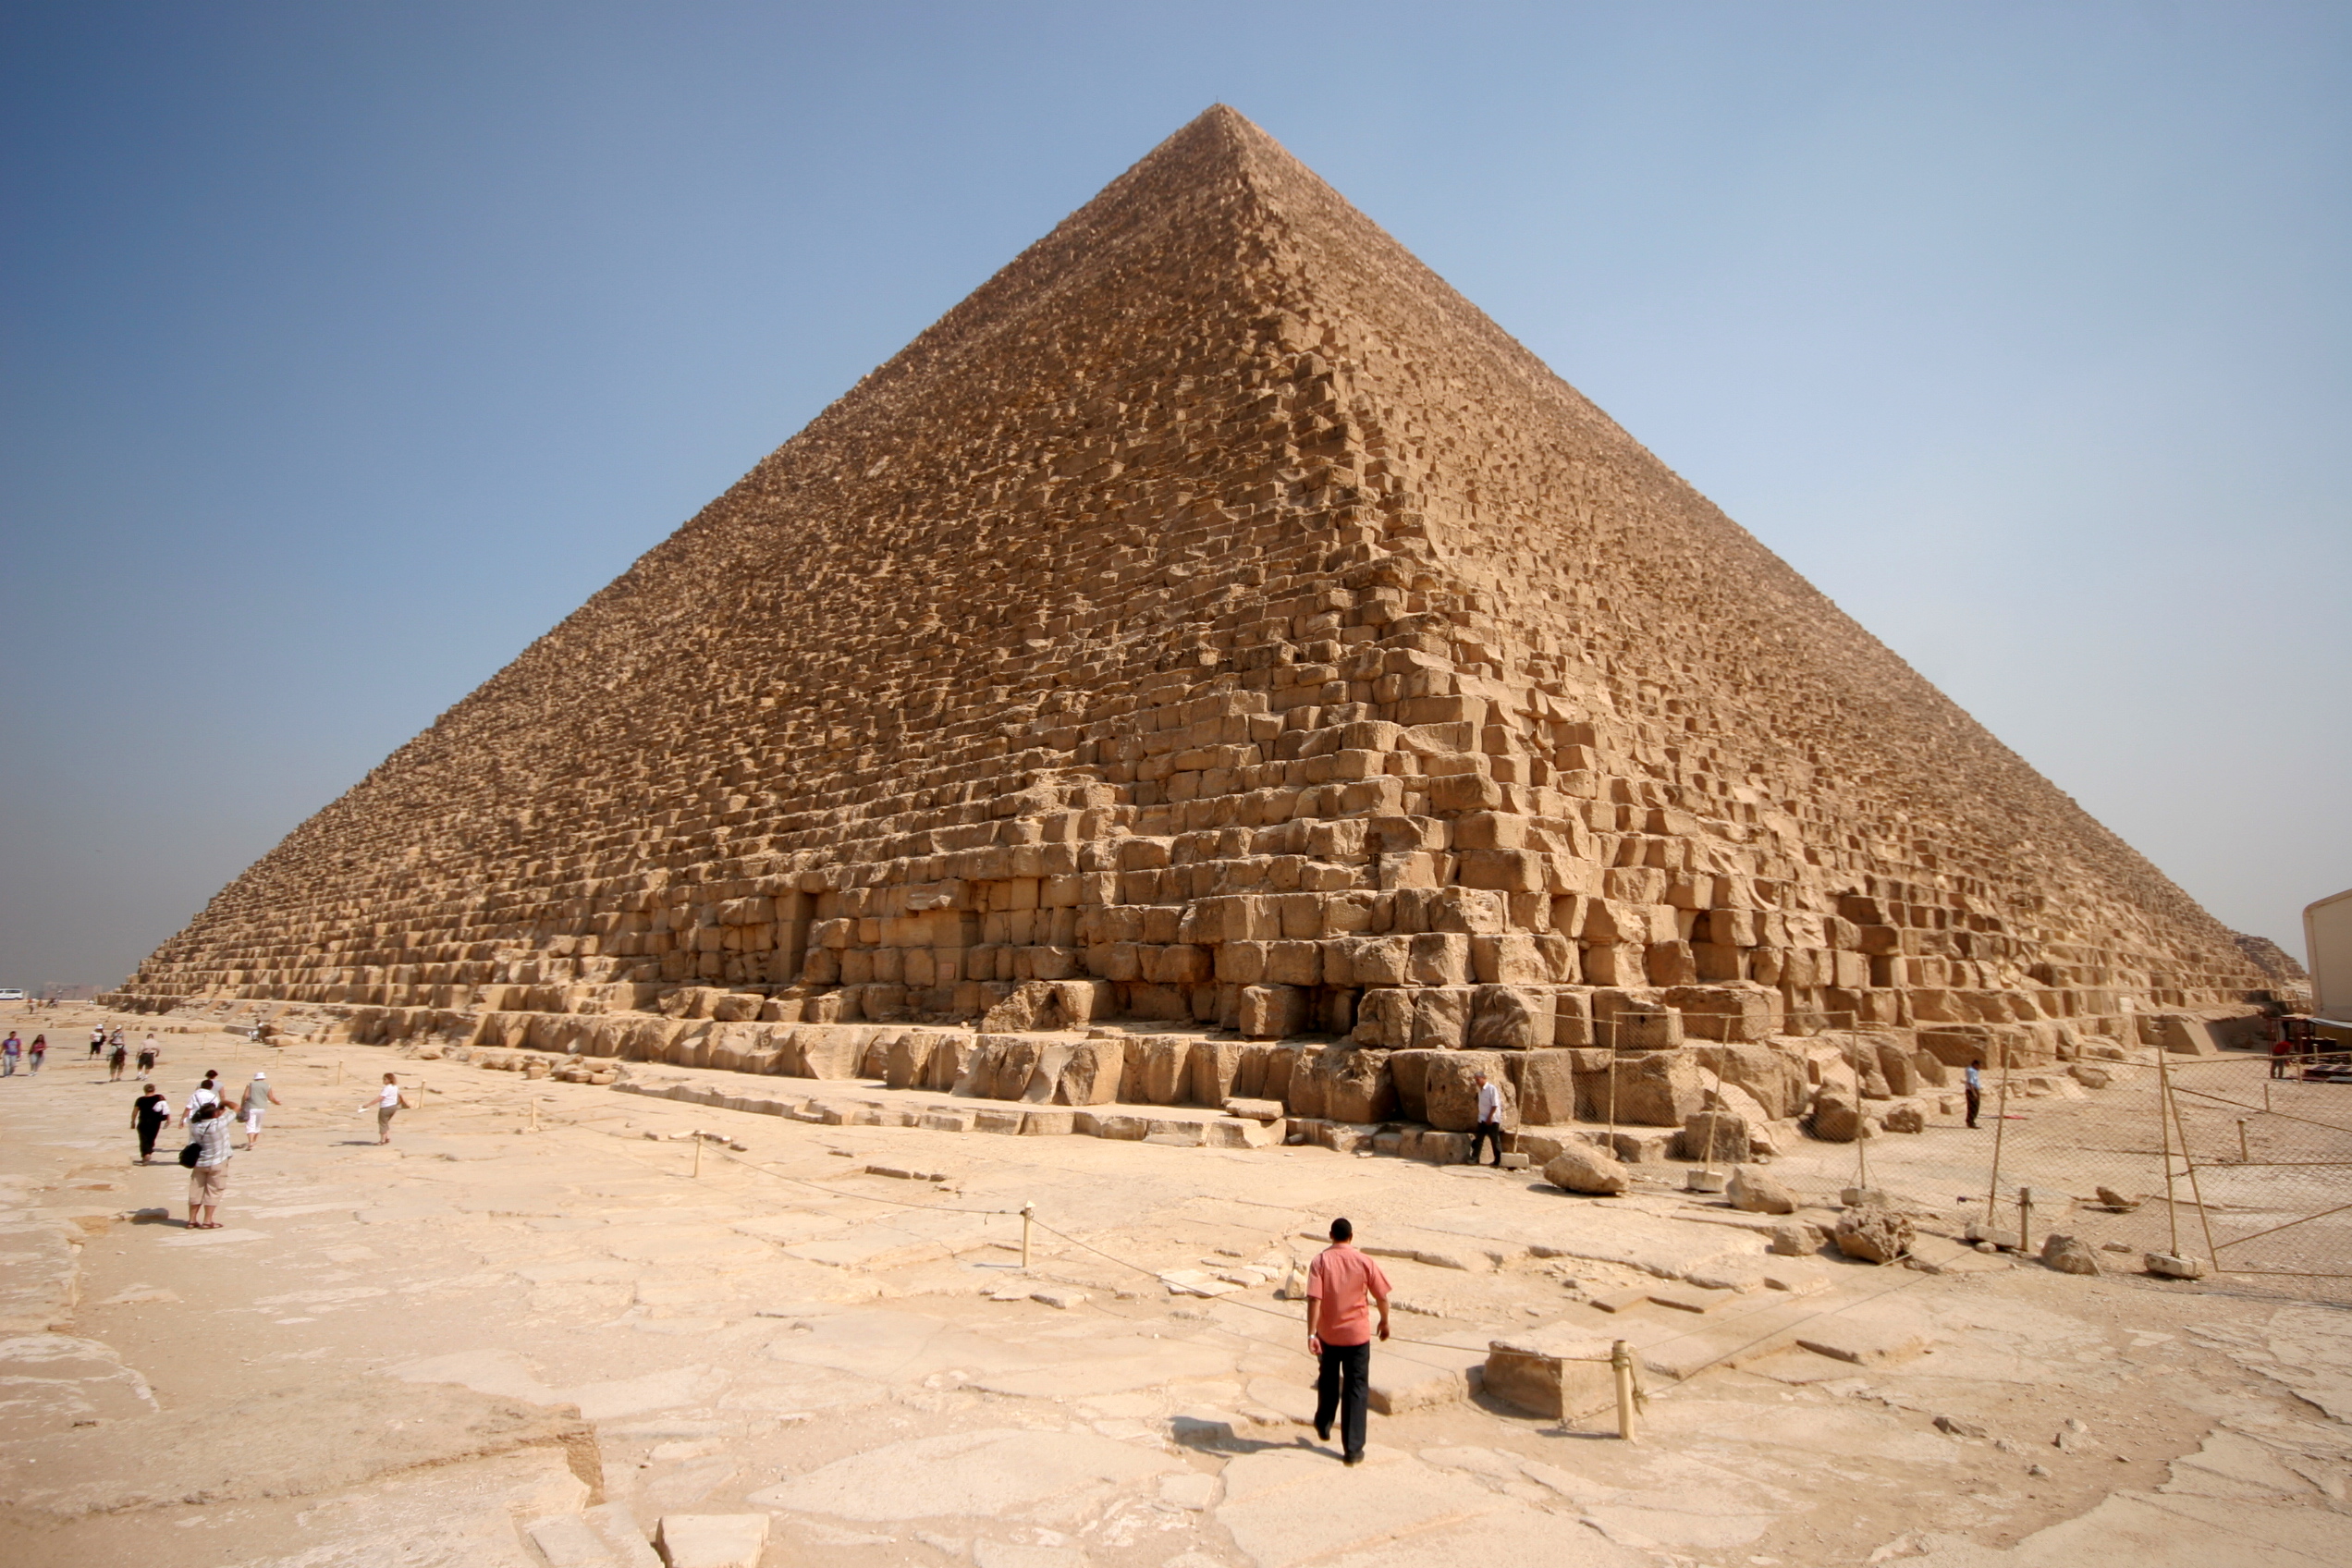 Постройки древности. Пирамида Хеопса древний Египет. Пирамида фиопсадревнего Египта. Пирамида Хуфу древний Египет. Пирамида Хеопса семь чудес света.